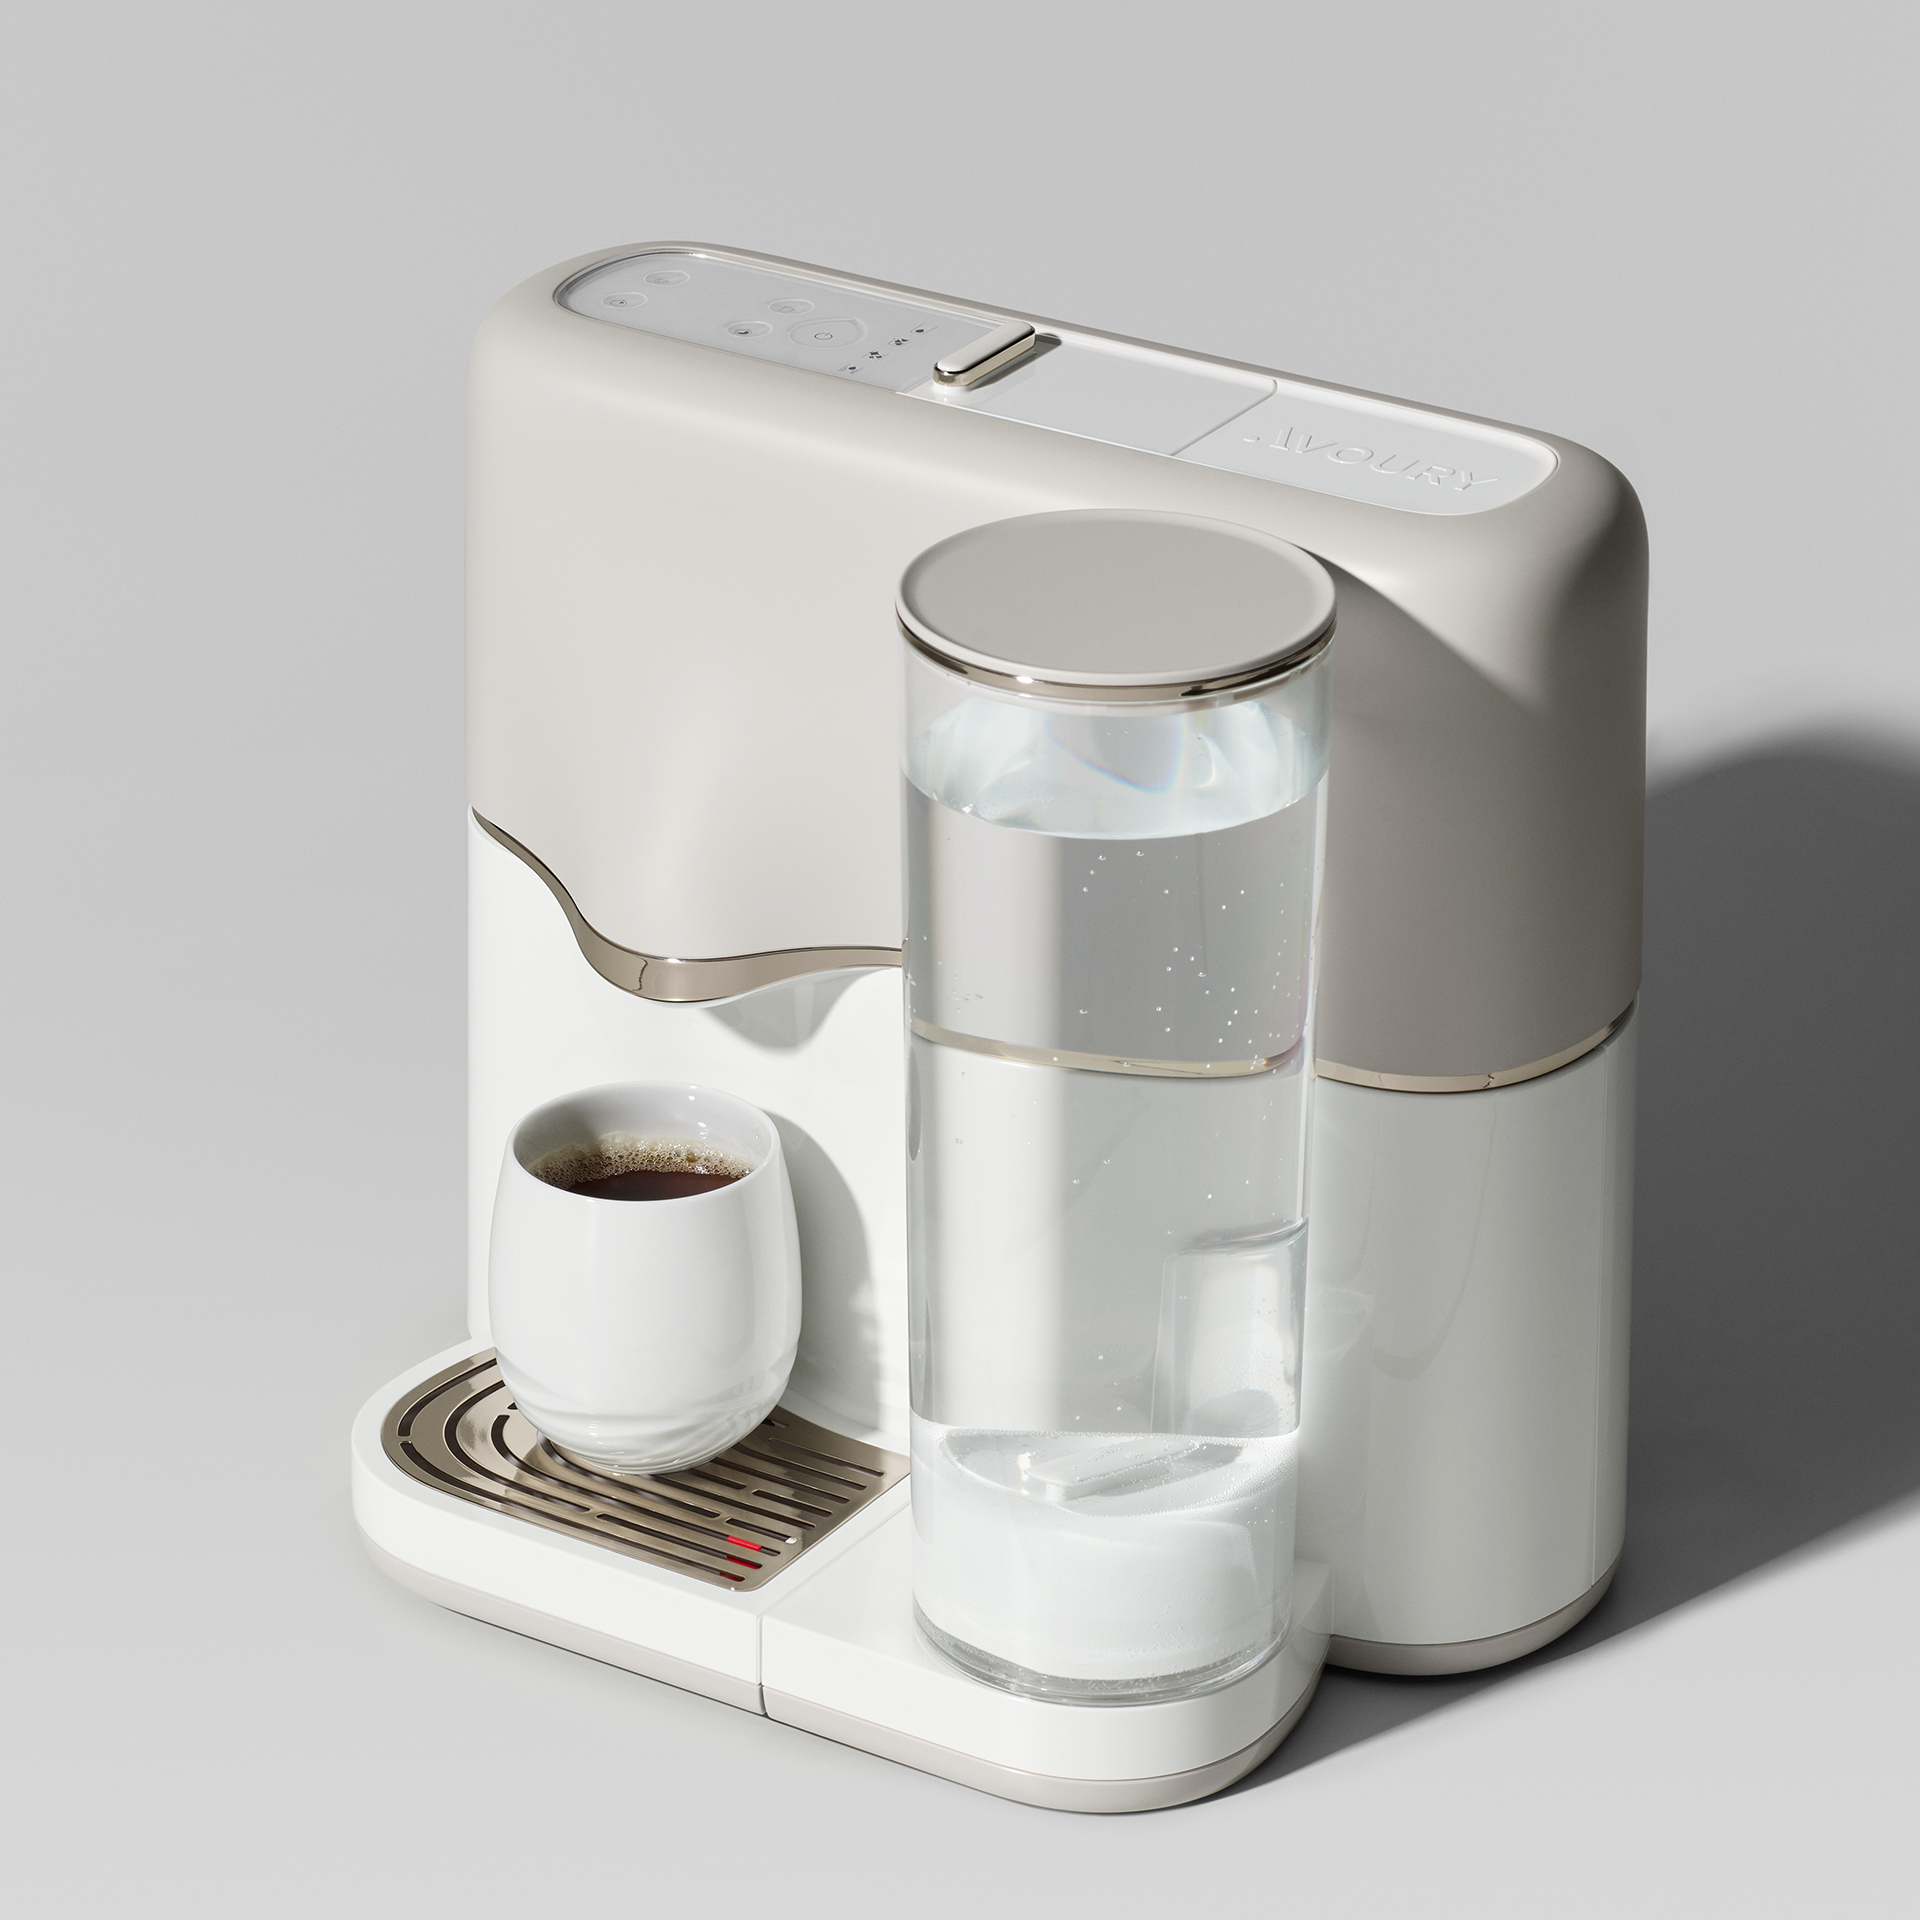 Avoury One Teemaschine Silver/White  | Avoury. The Tea.